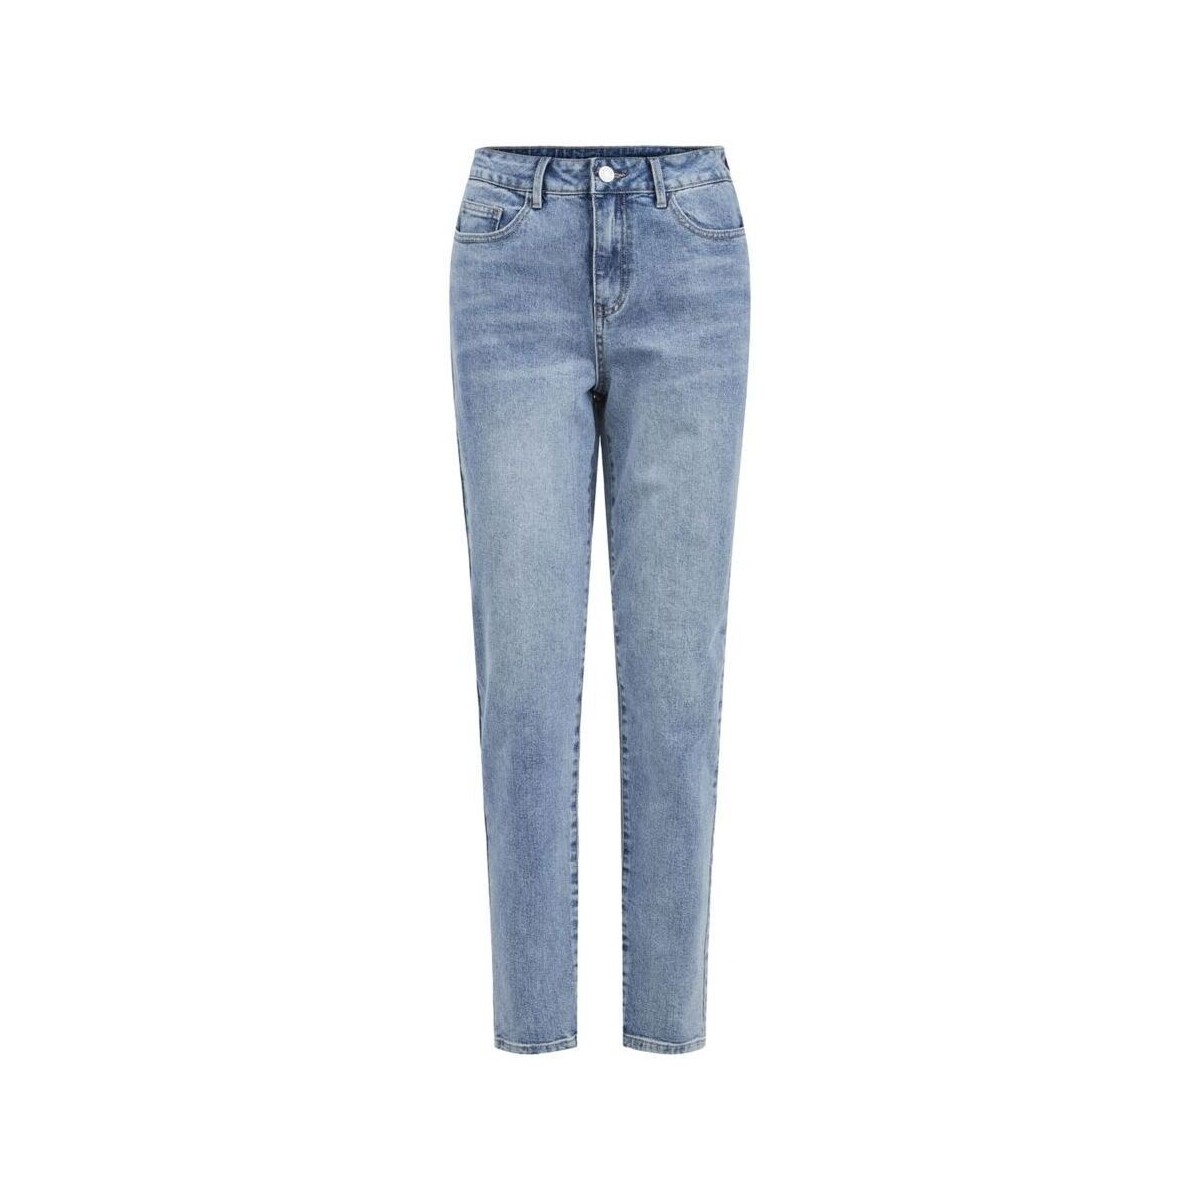 Textiel Dames Broeken / Pantalons Vila Mommie Jeans - Light Blue Denim Blauw